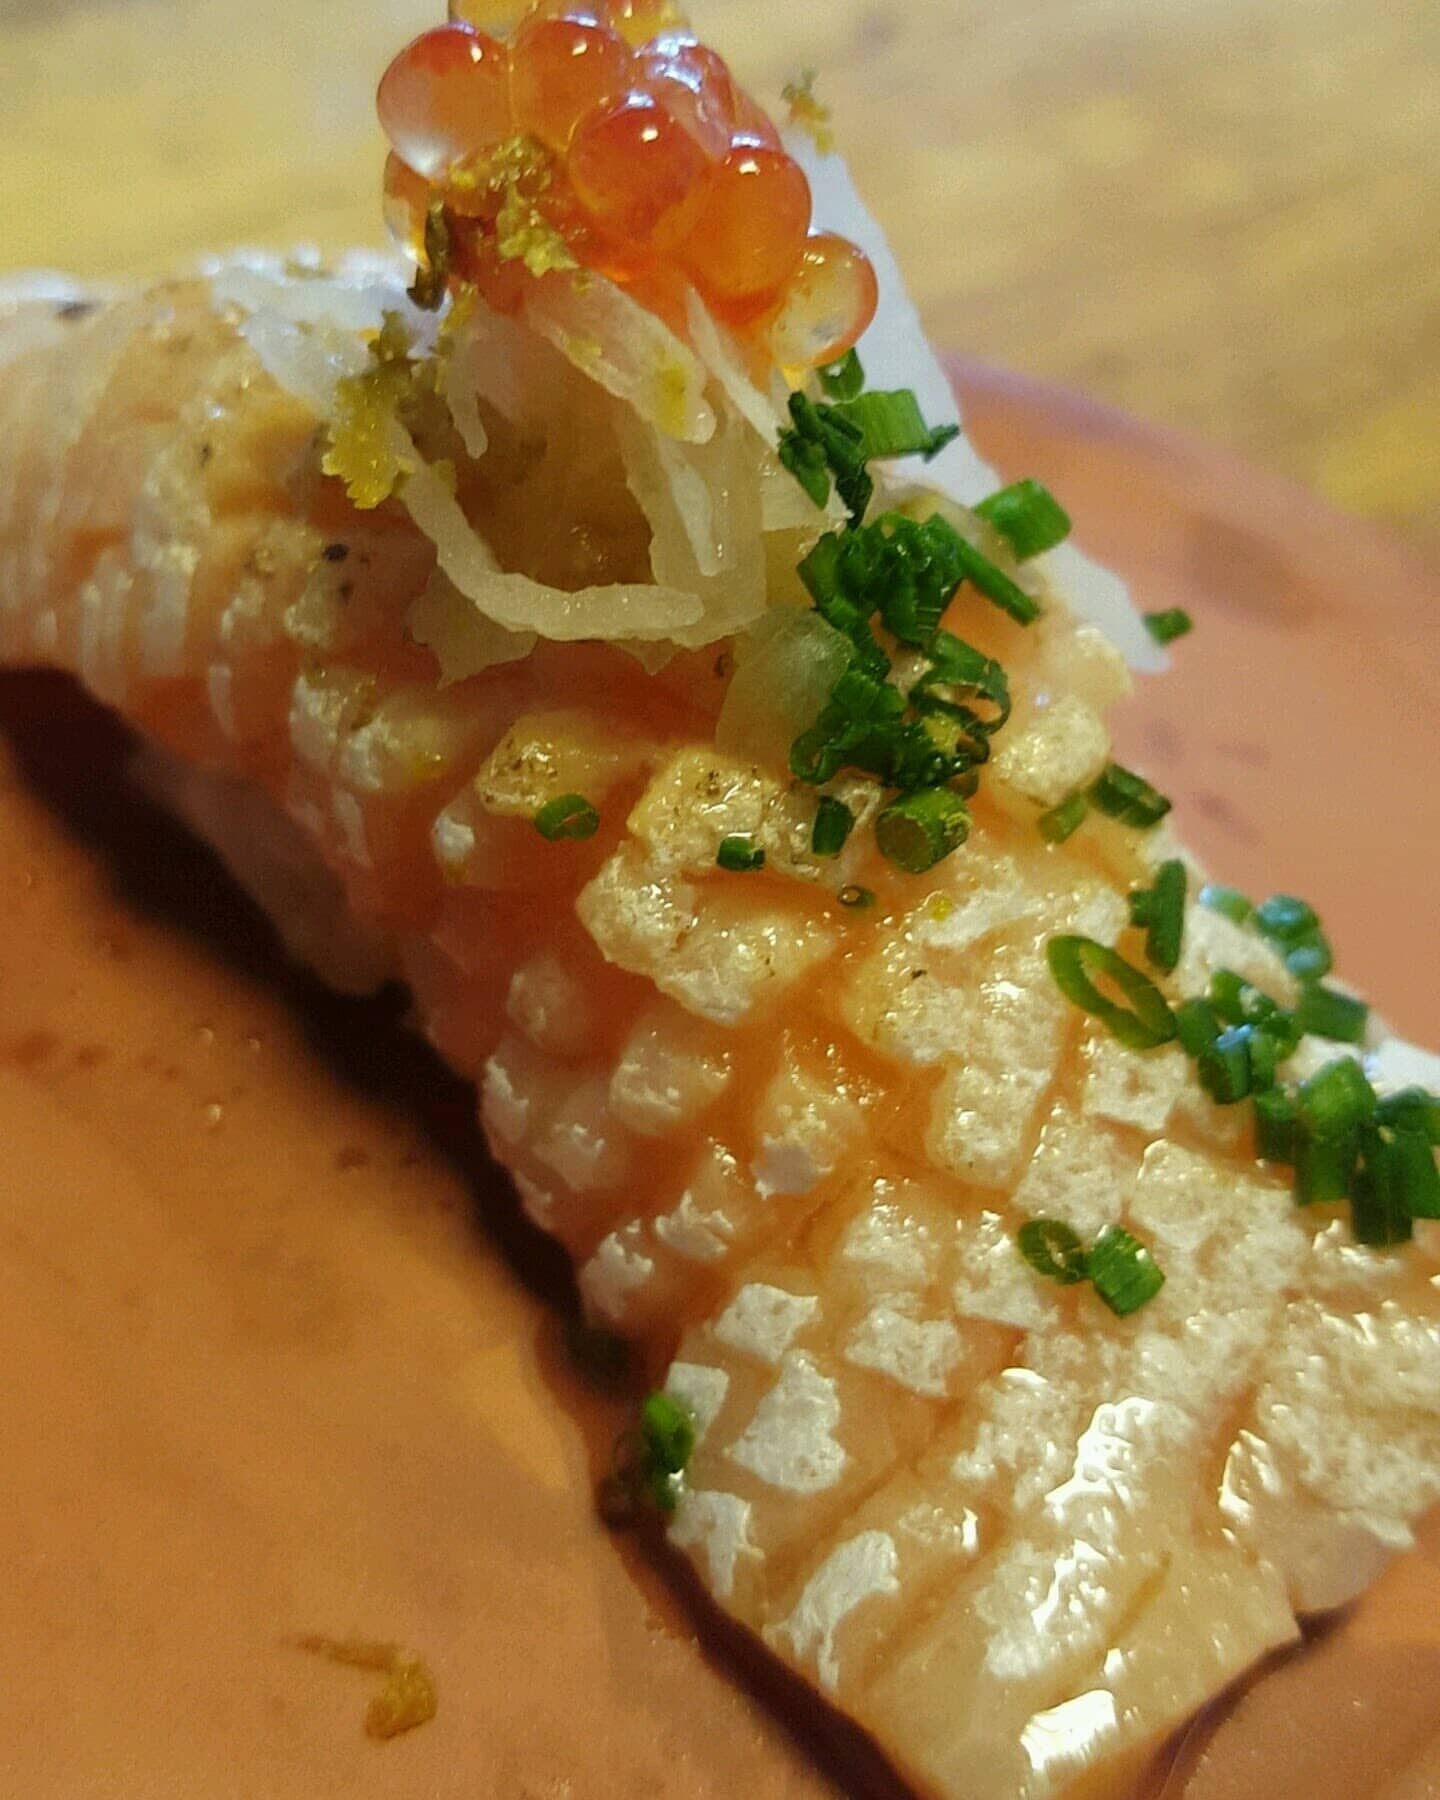 #salmon #belly #nigiri
#teamlovundkokken
#sushi 
#lovundkokkensushi 
#lovundkokken